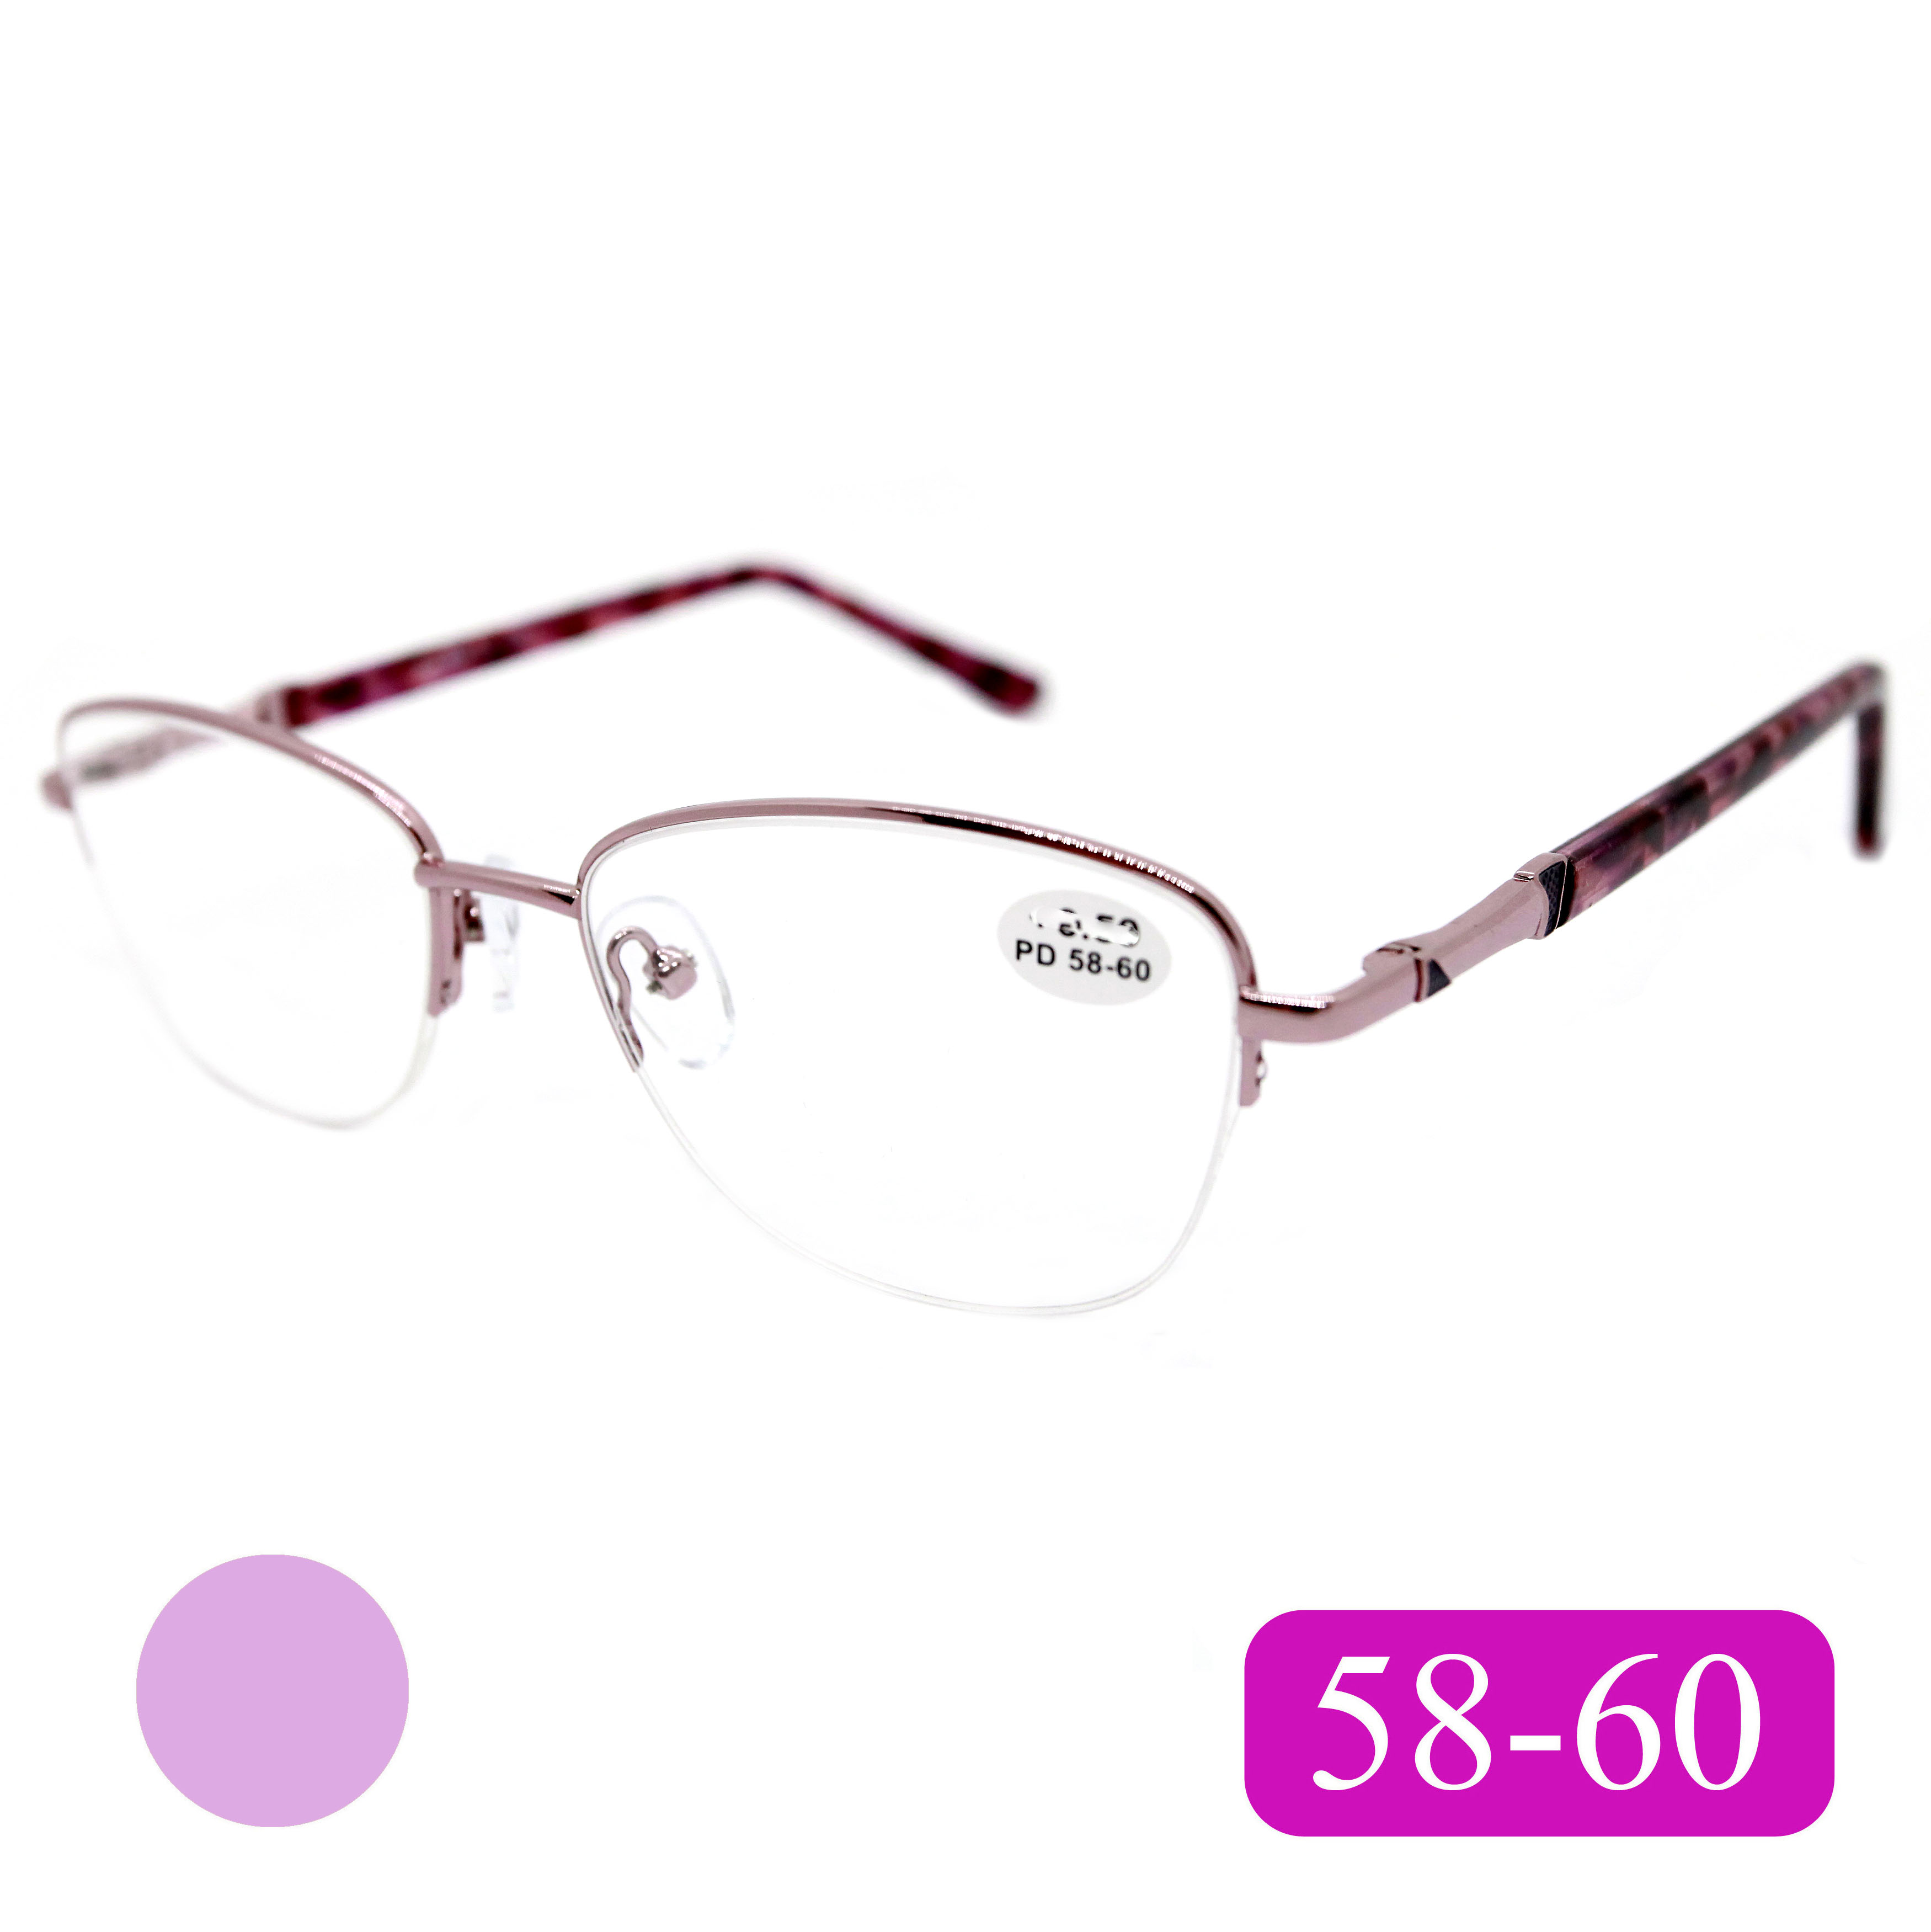 Готовые очки Fabia Monti 8920 +7.00, без футляра, цвет фиолетовый, РЦ 58-60